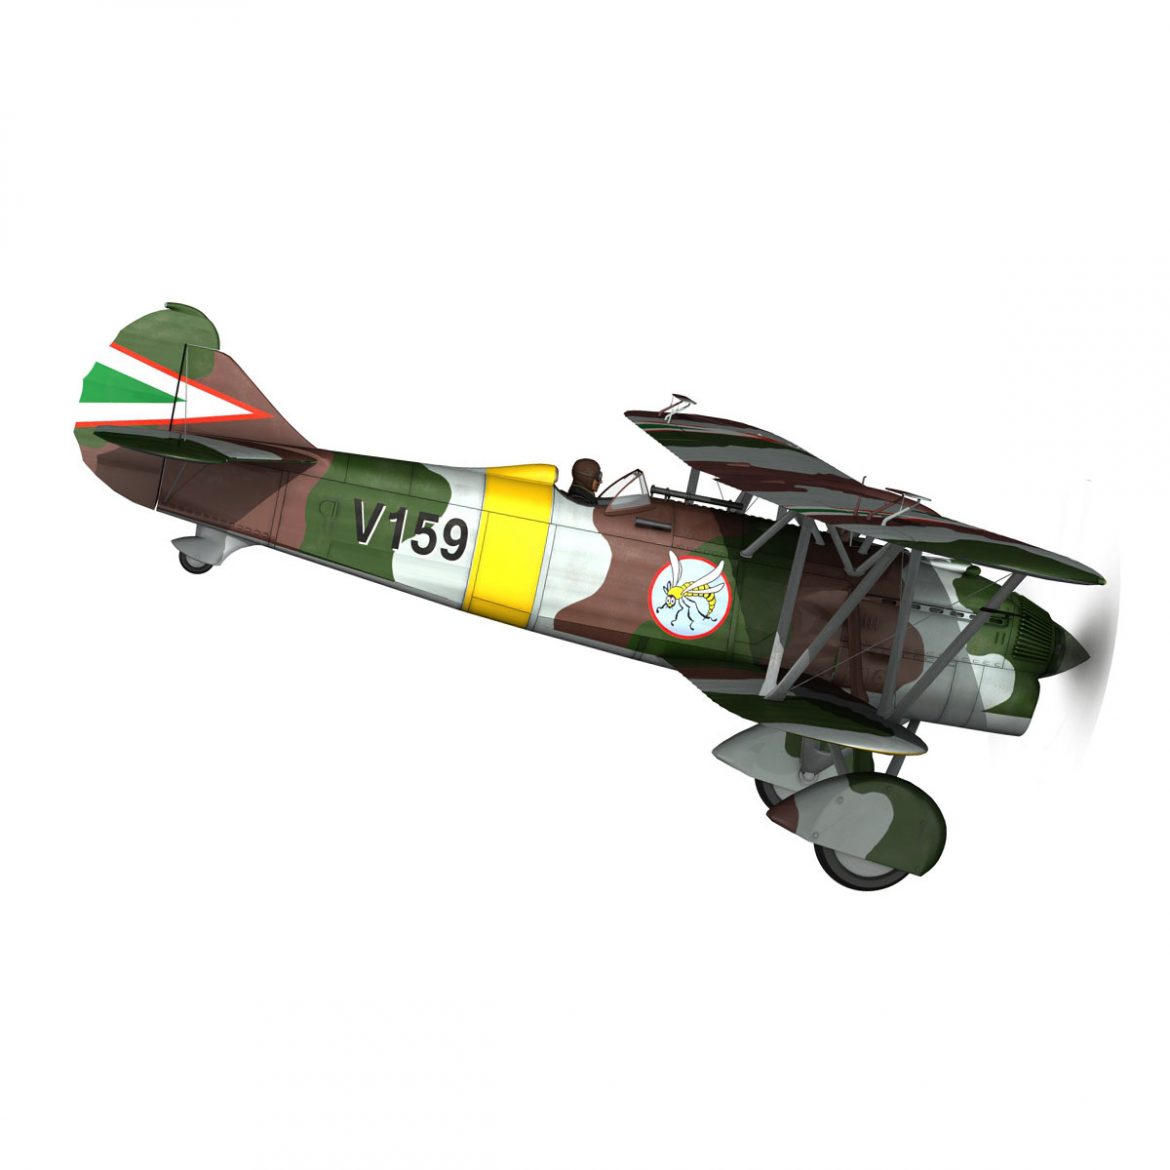 fiat cr.32 – hungarian royal air force – v159 3d model fbx c4d lwo obj 299964